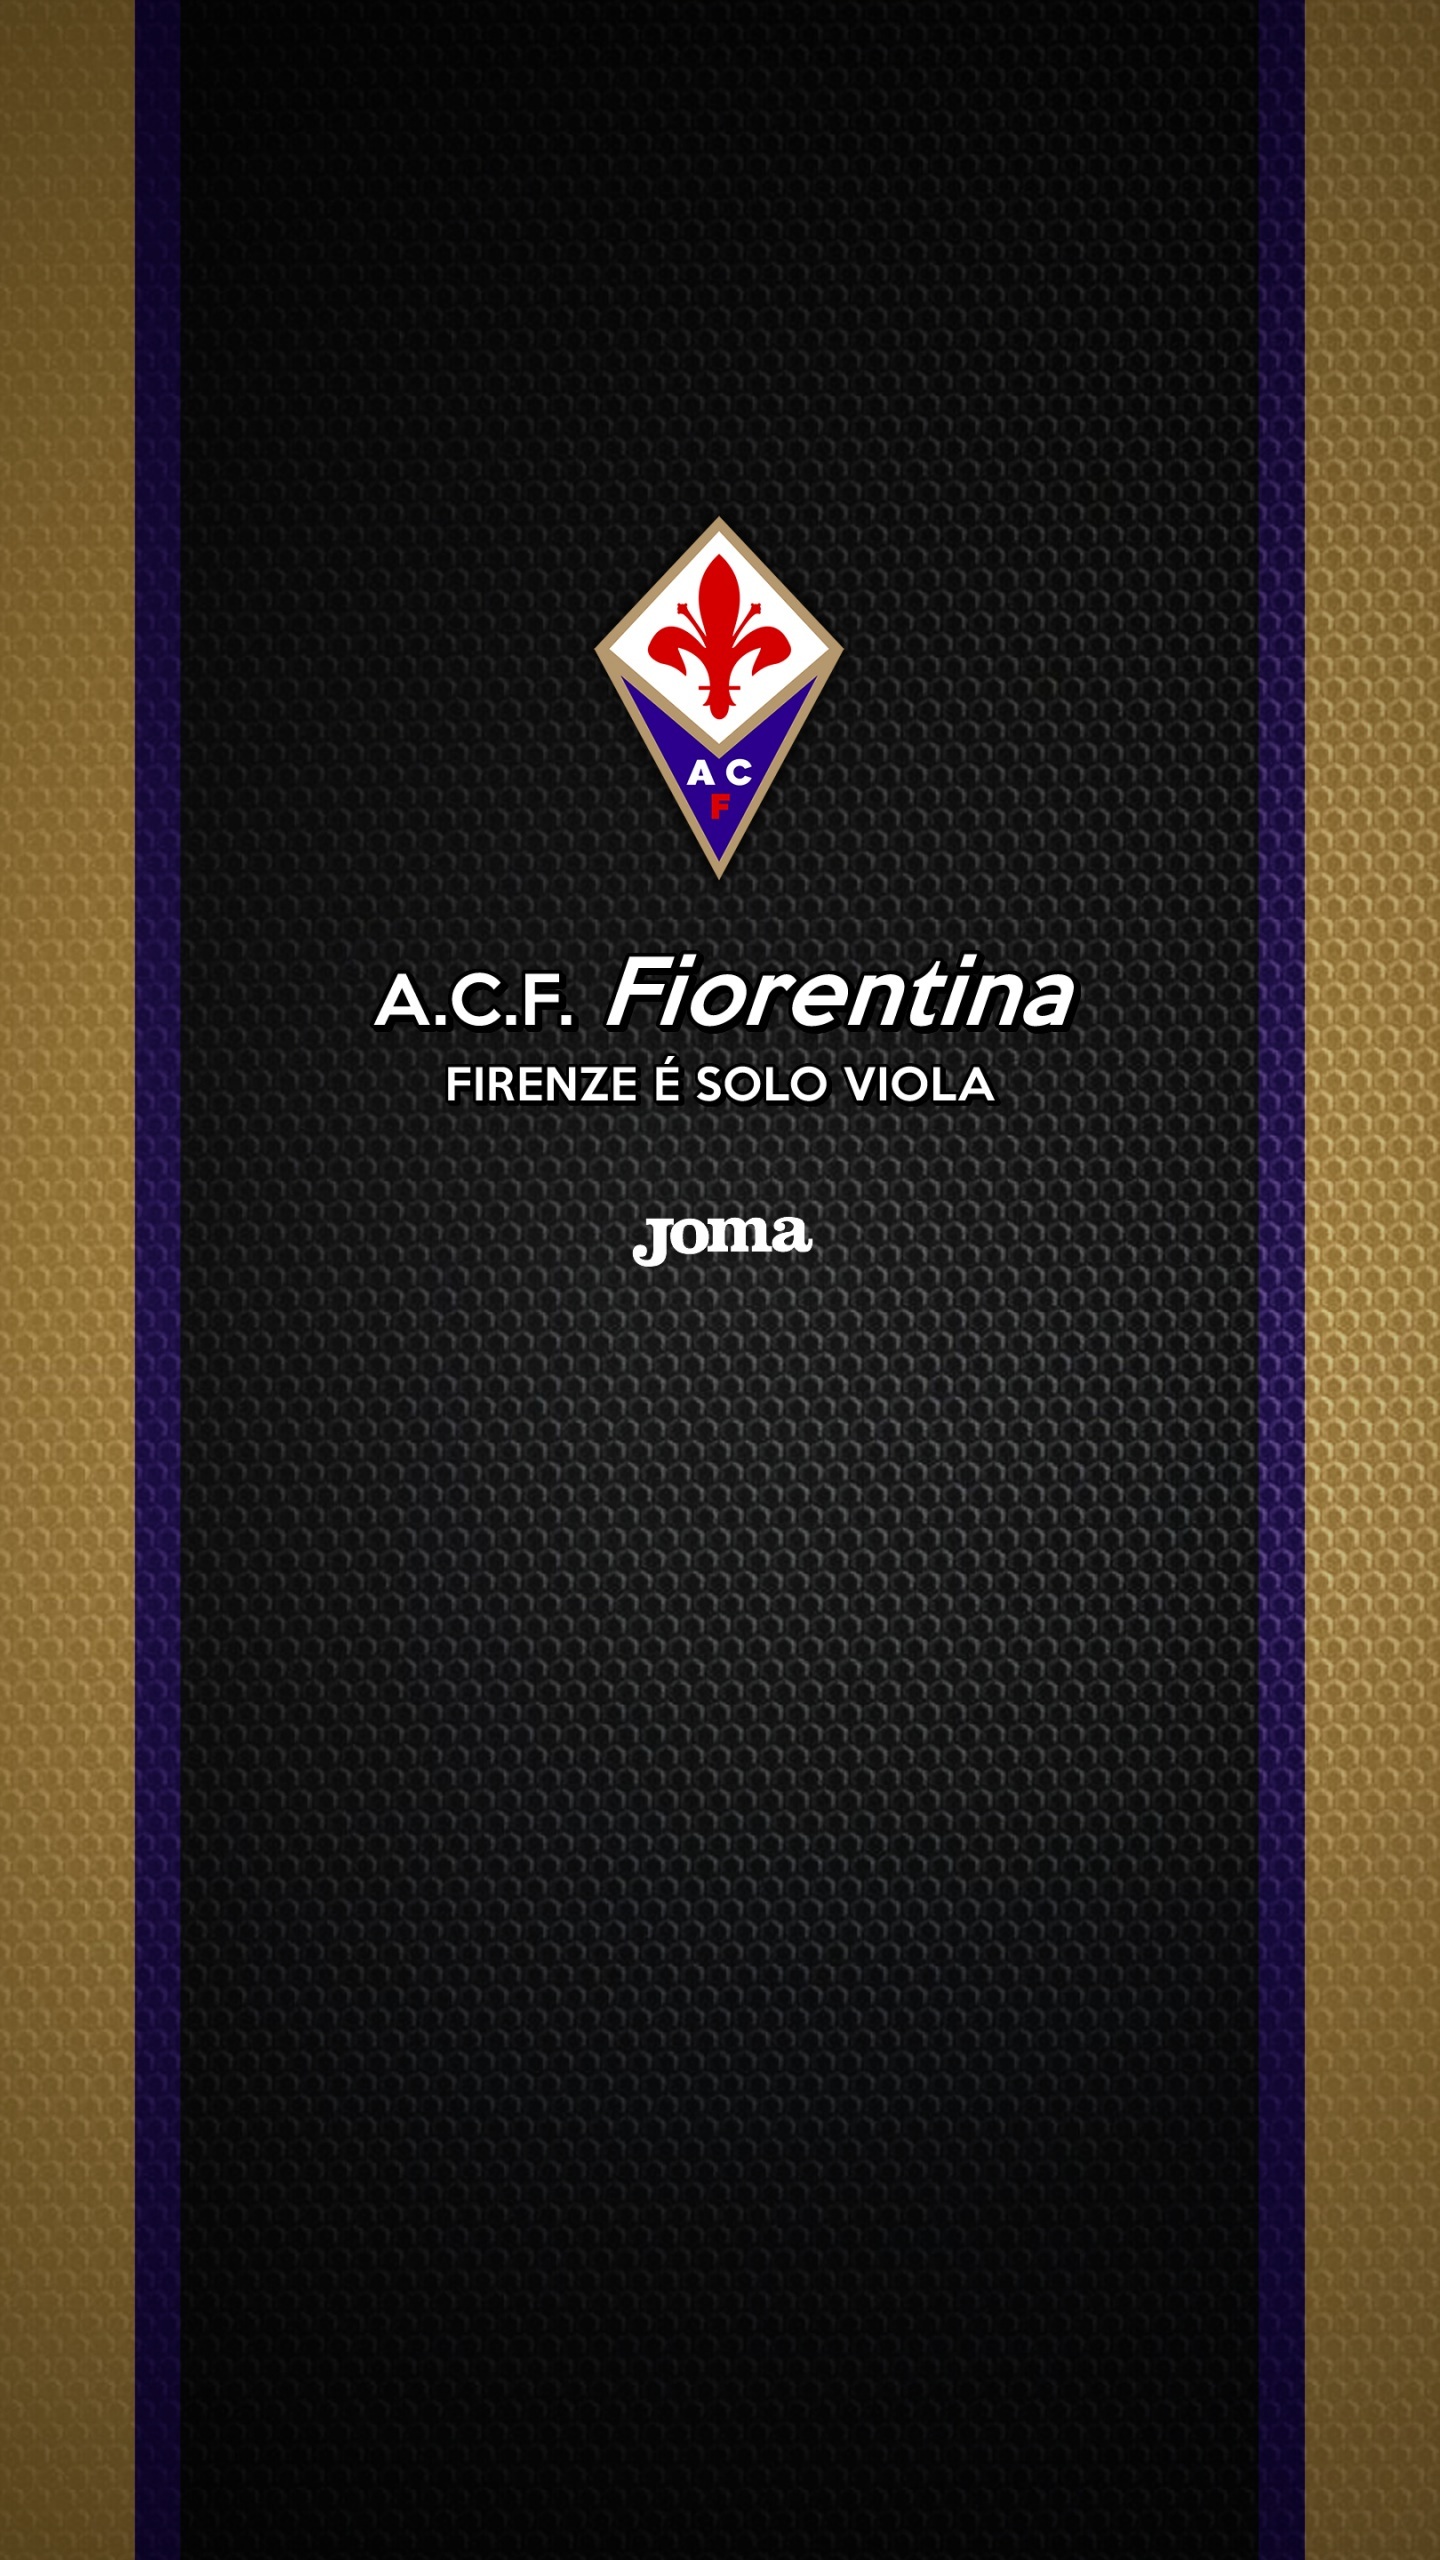 Acf Fiorentina Smartphone Wallpaper BygoloteHD Photo